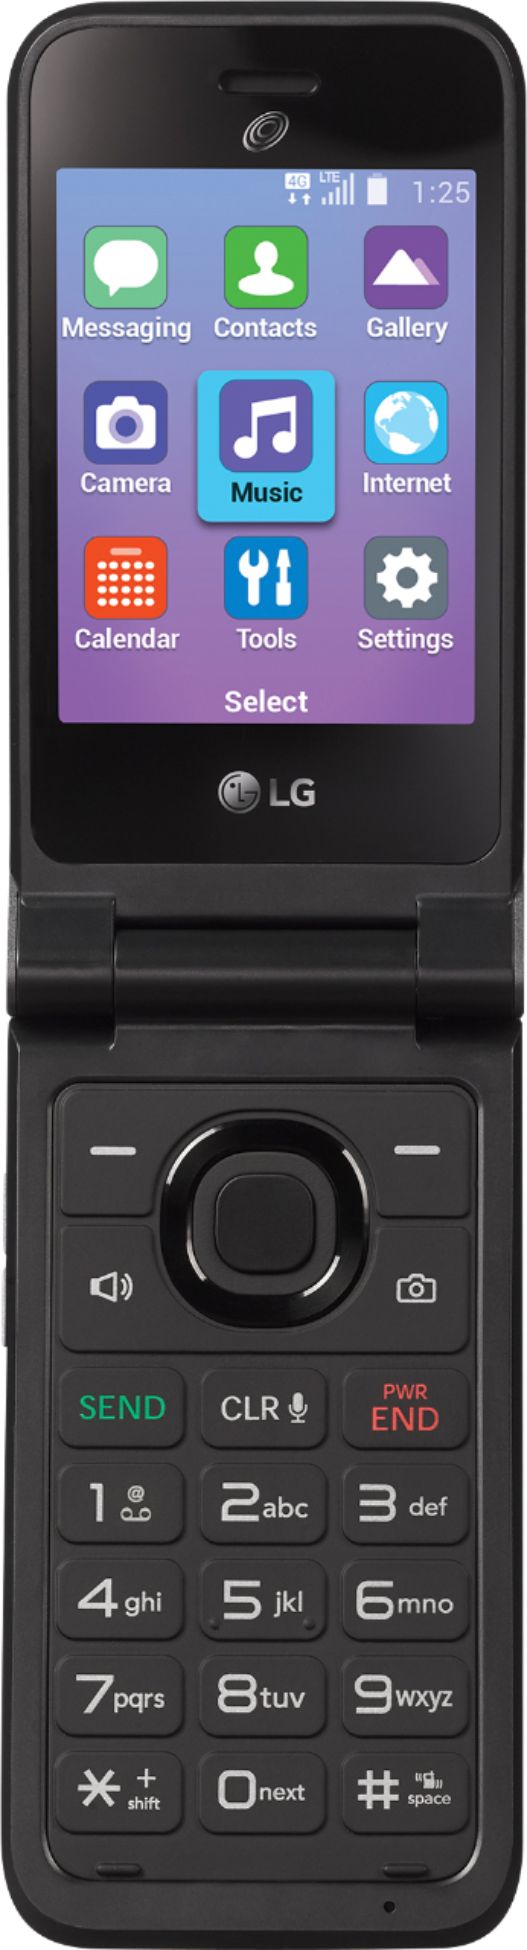 TracFone - LG Classic Flip Prepaid - Gray